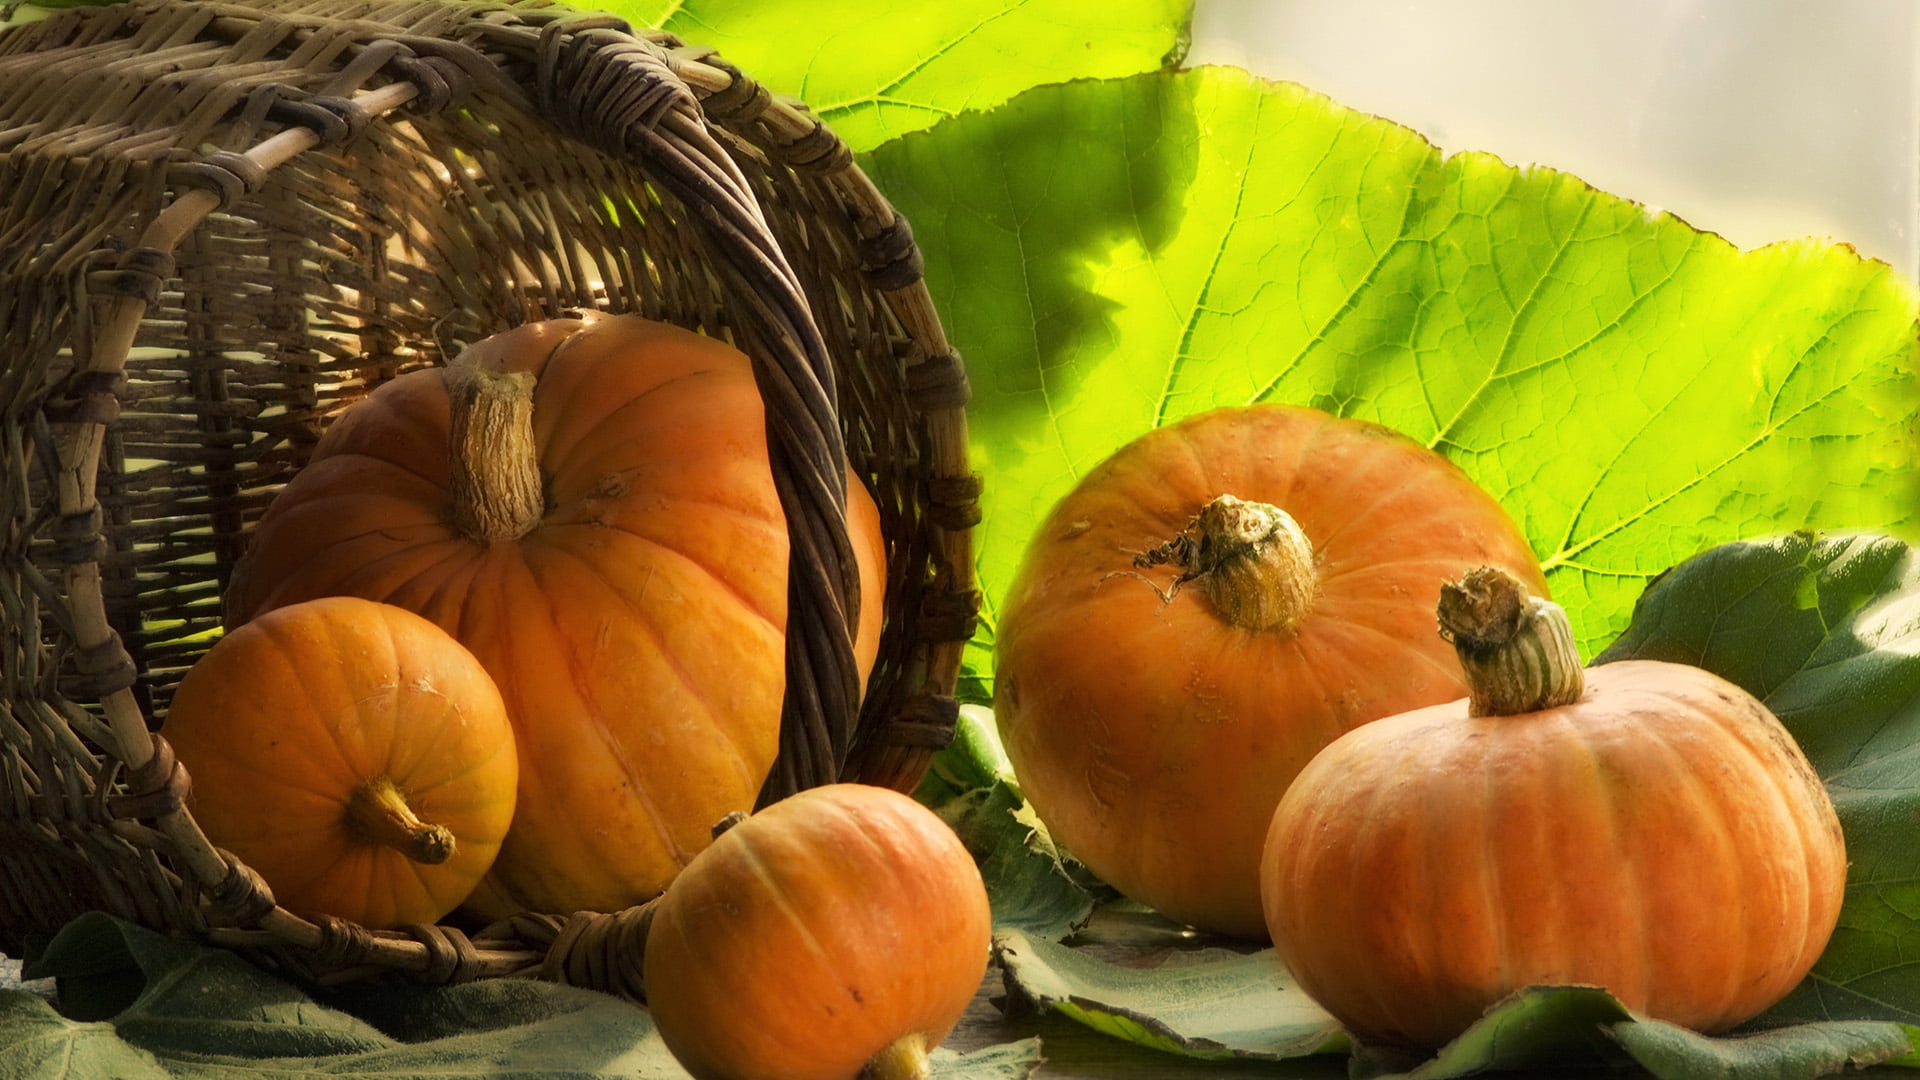 squash, pumpkin, vegetable, produce, halloween, autumn, orange